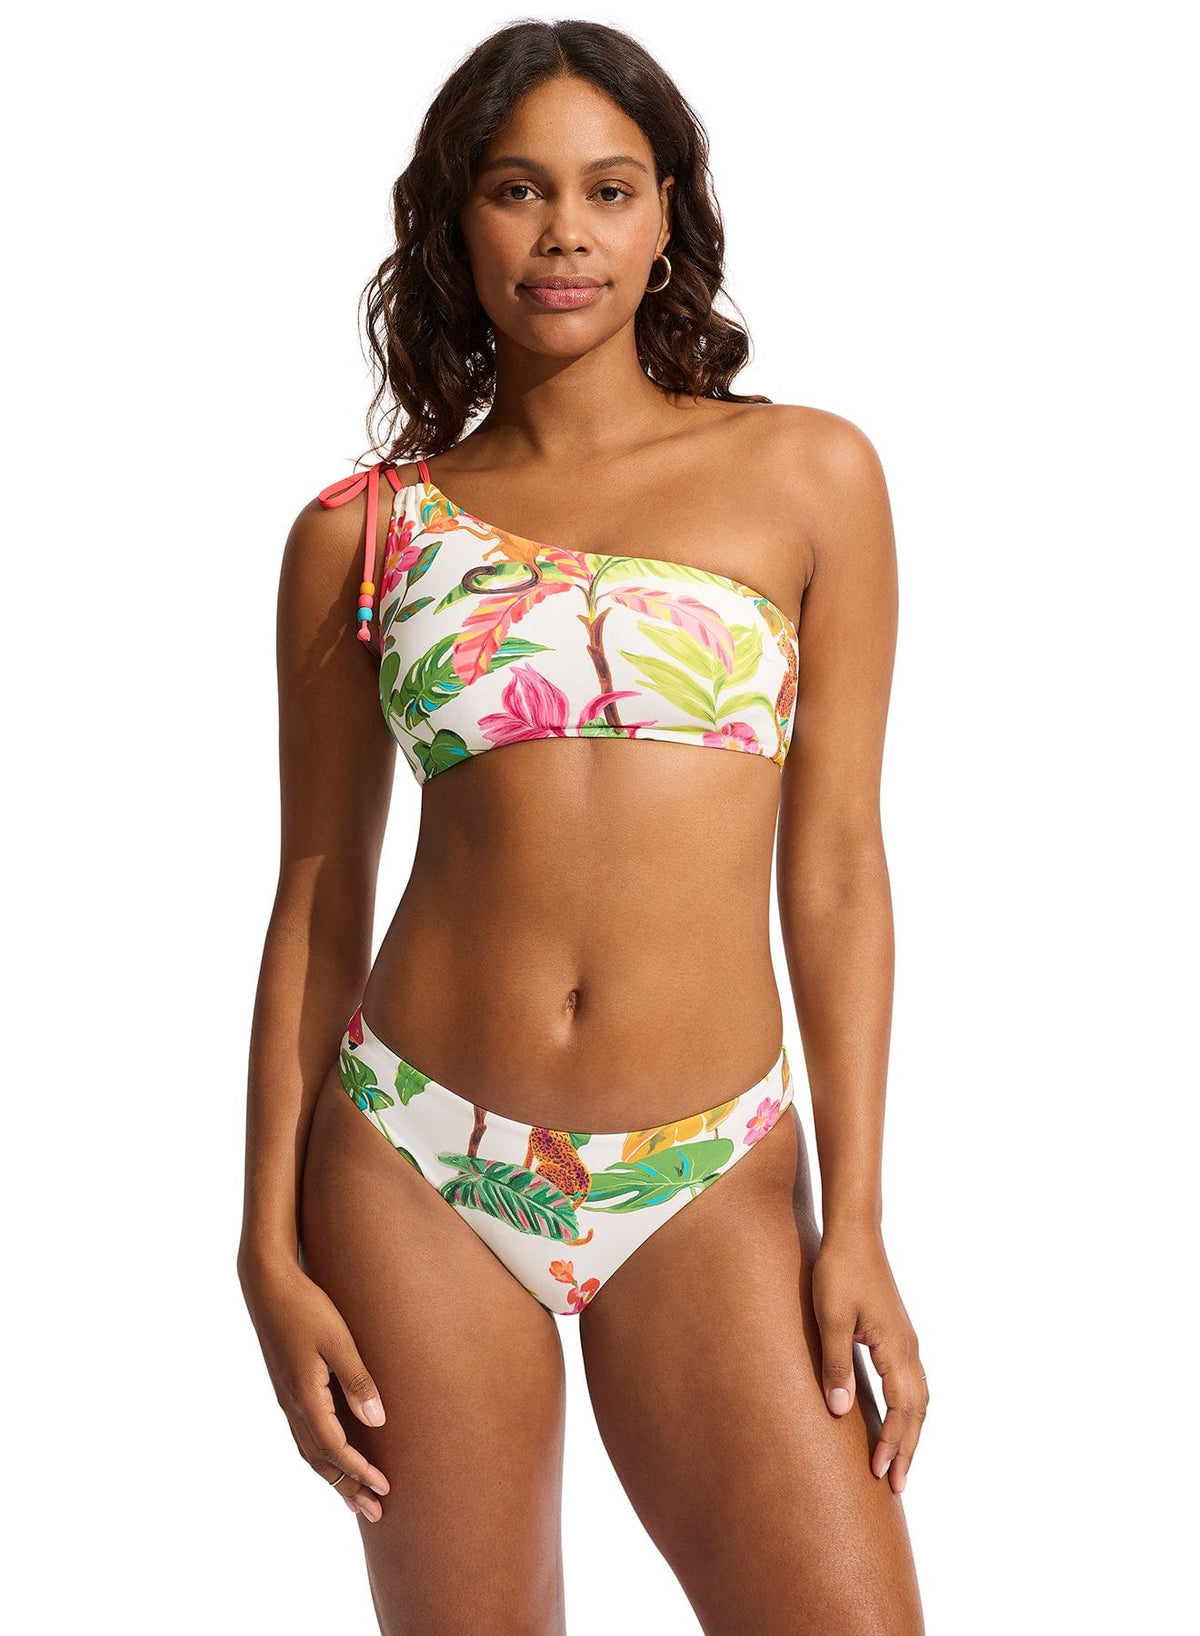 Tropica One Shoulder Top With Tie - Seafolly - Splash Swimwear  - Bikini Tops, Seafolly, Sept23, tankini tops, Womens, womens swim - Splash Swimwear 